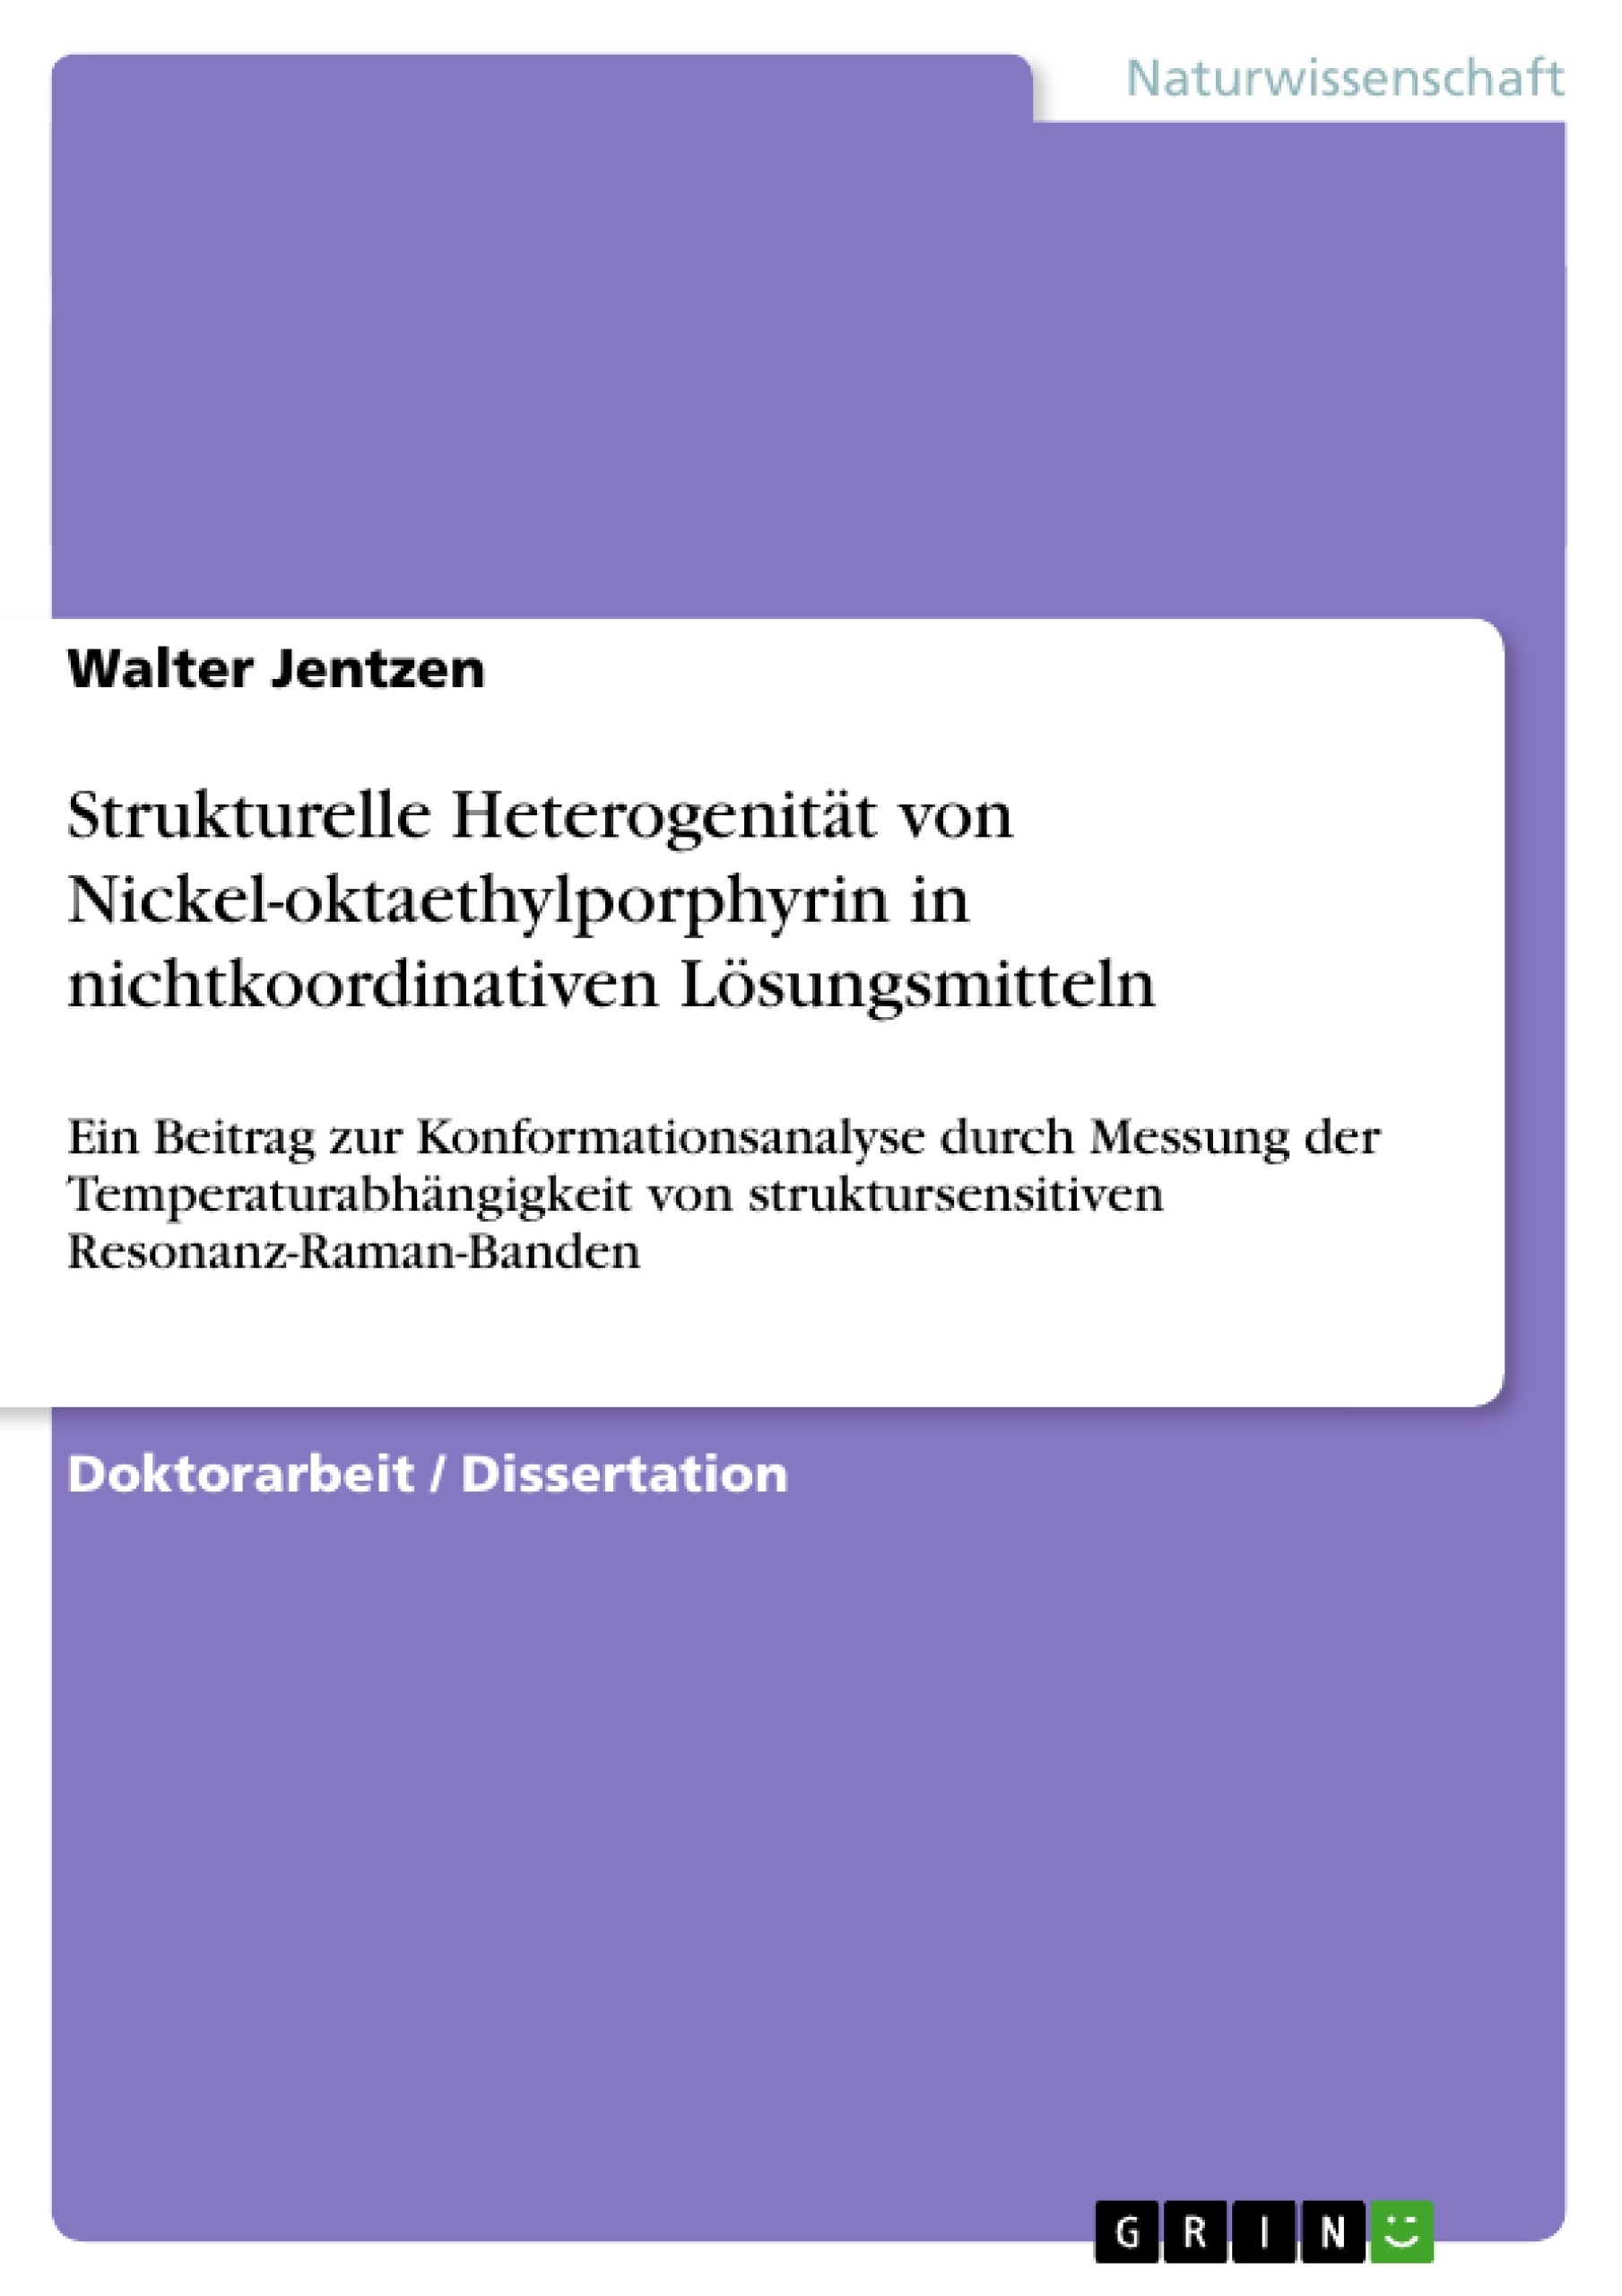 Titel: Strukturelle Heterogenität von Nickel-oktaethylporphyrin in nichtkoordinativen Lösungsmitteln